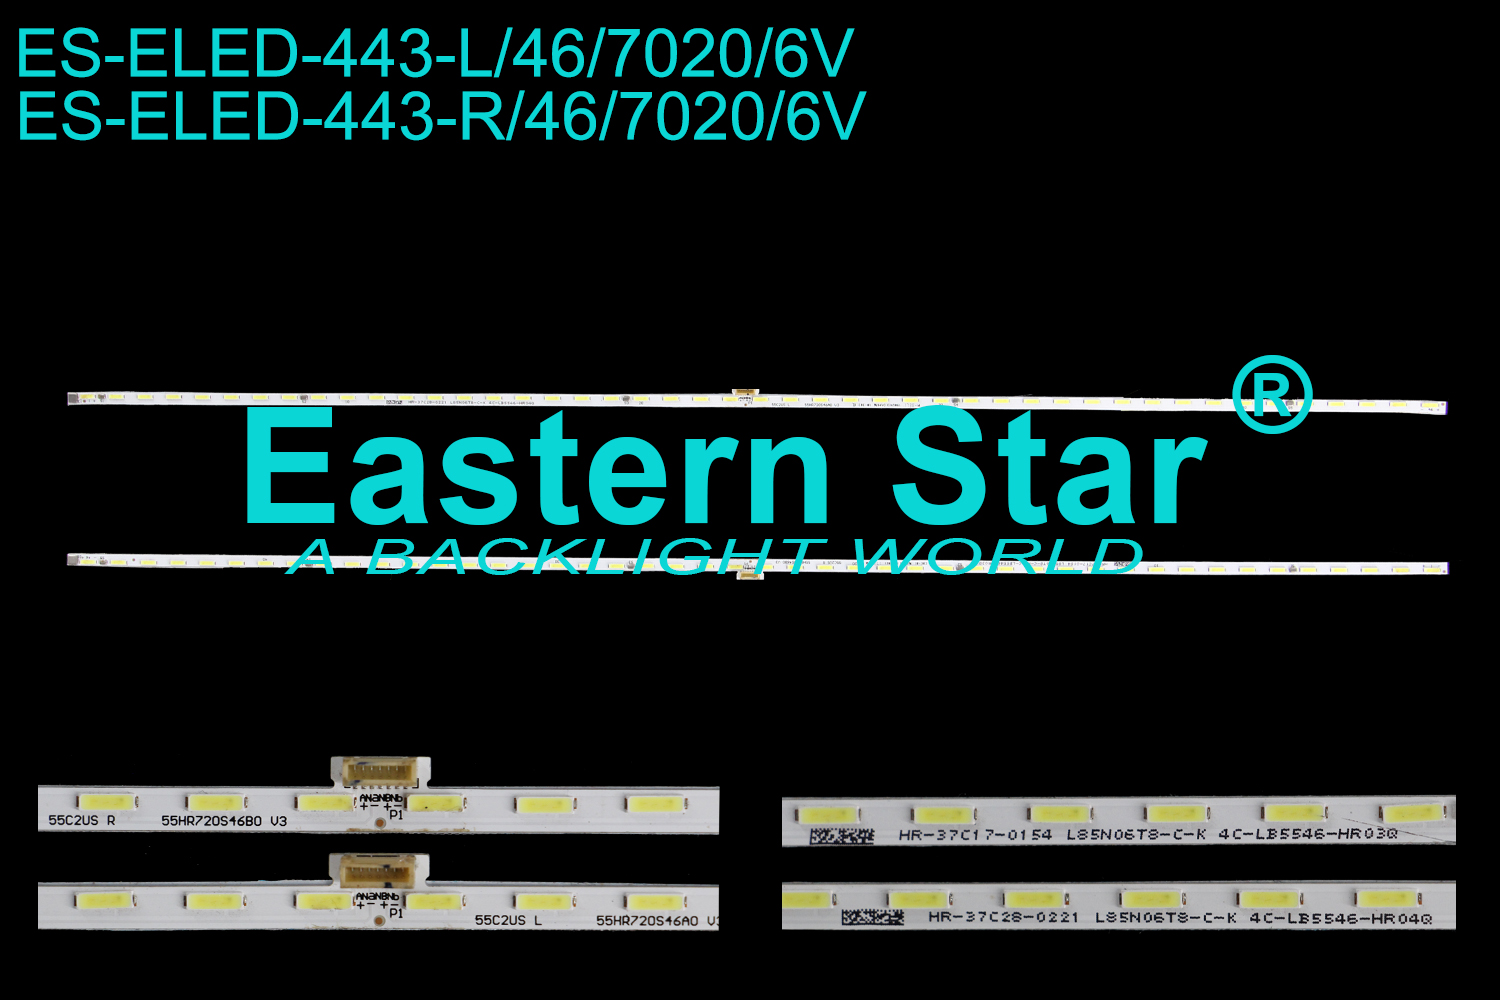 ES-ELED-443 ELED/EDGE TV backlight use for 55'' Tcl 55C2US  L/R: 55C2US L/R  55HR720S46A0 V3 HR-37C28-0221 L85N06T8-C-K 4C-LB55 LED STRIPS(2）